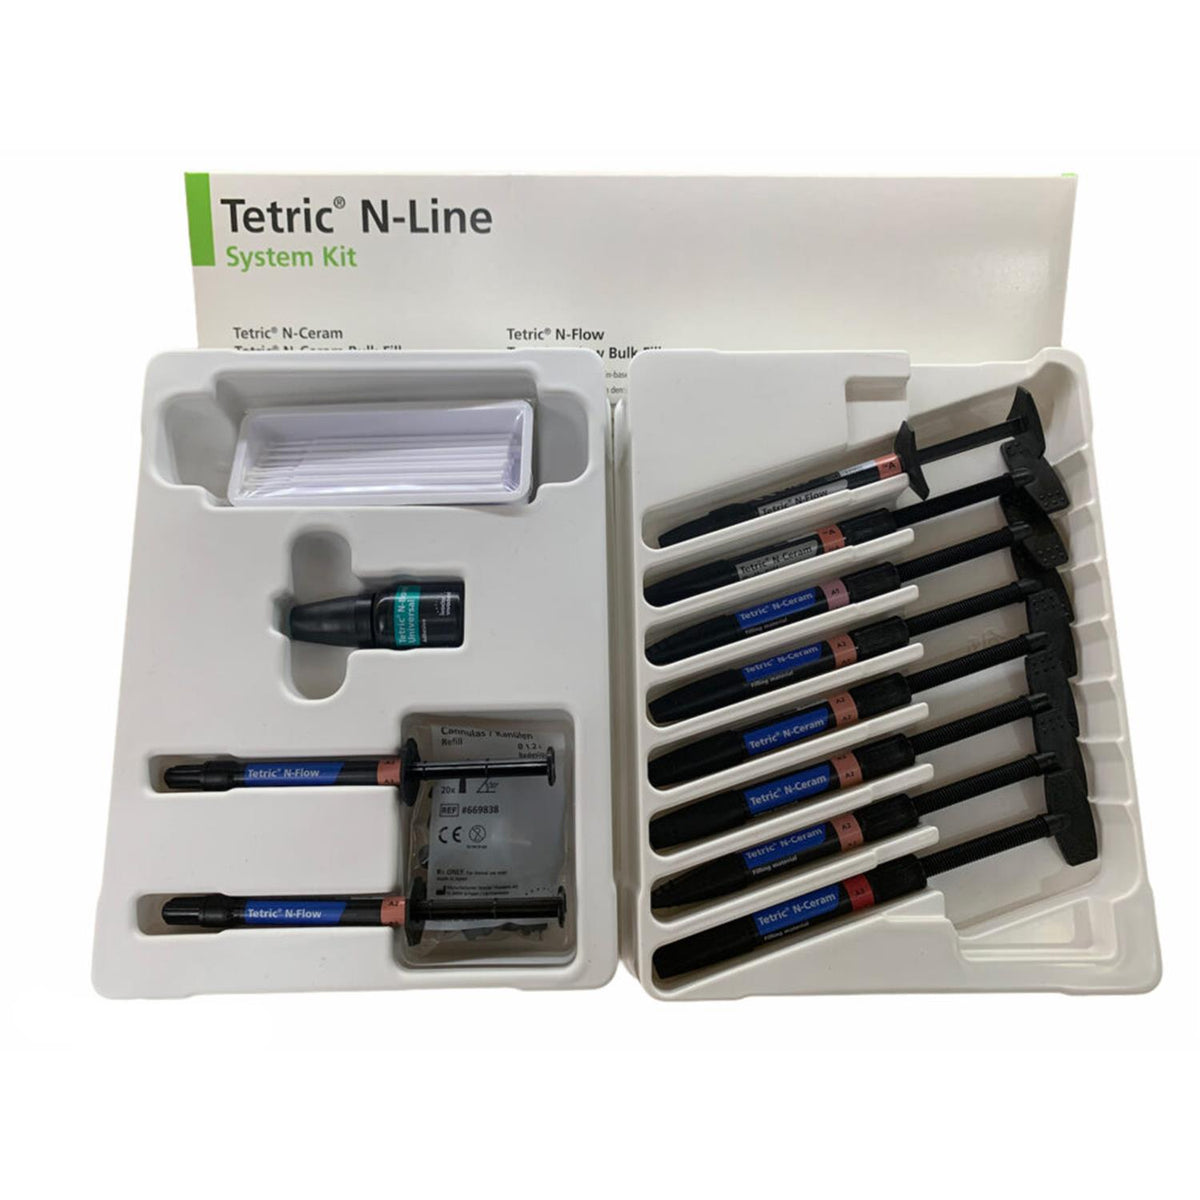 DentrealStore - Ivoclar Vivadent Tetric N-Line System Kit - Universal Composite Resin